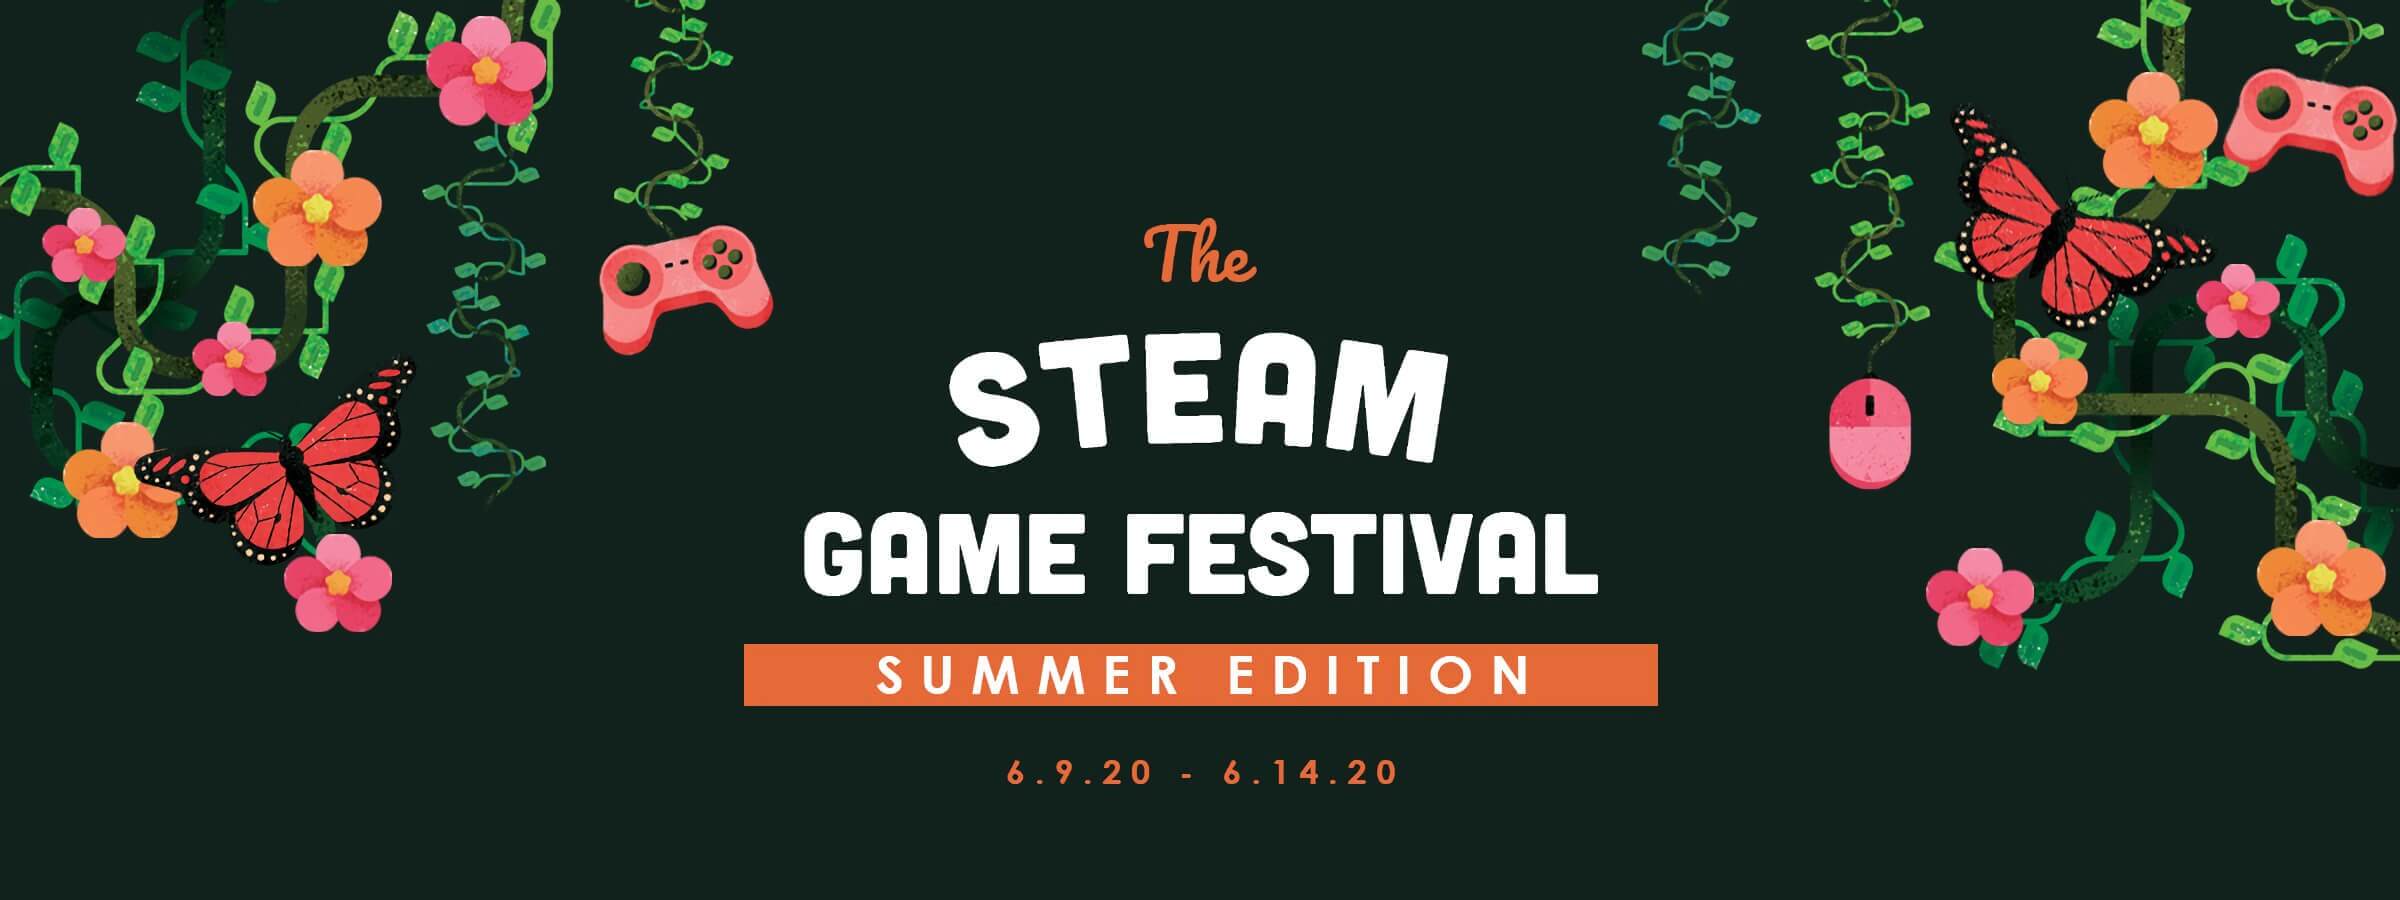 Steam's Summer Game Festival slated for June 9 to 14